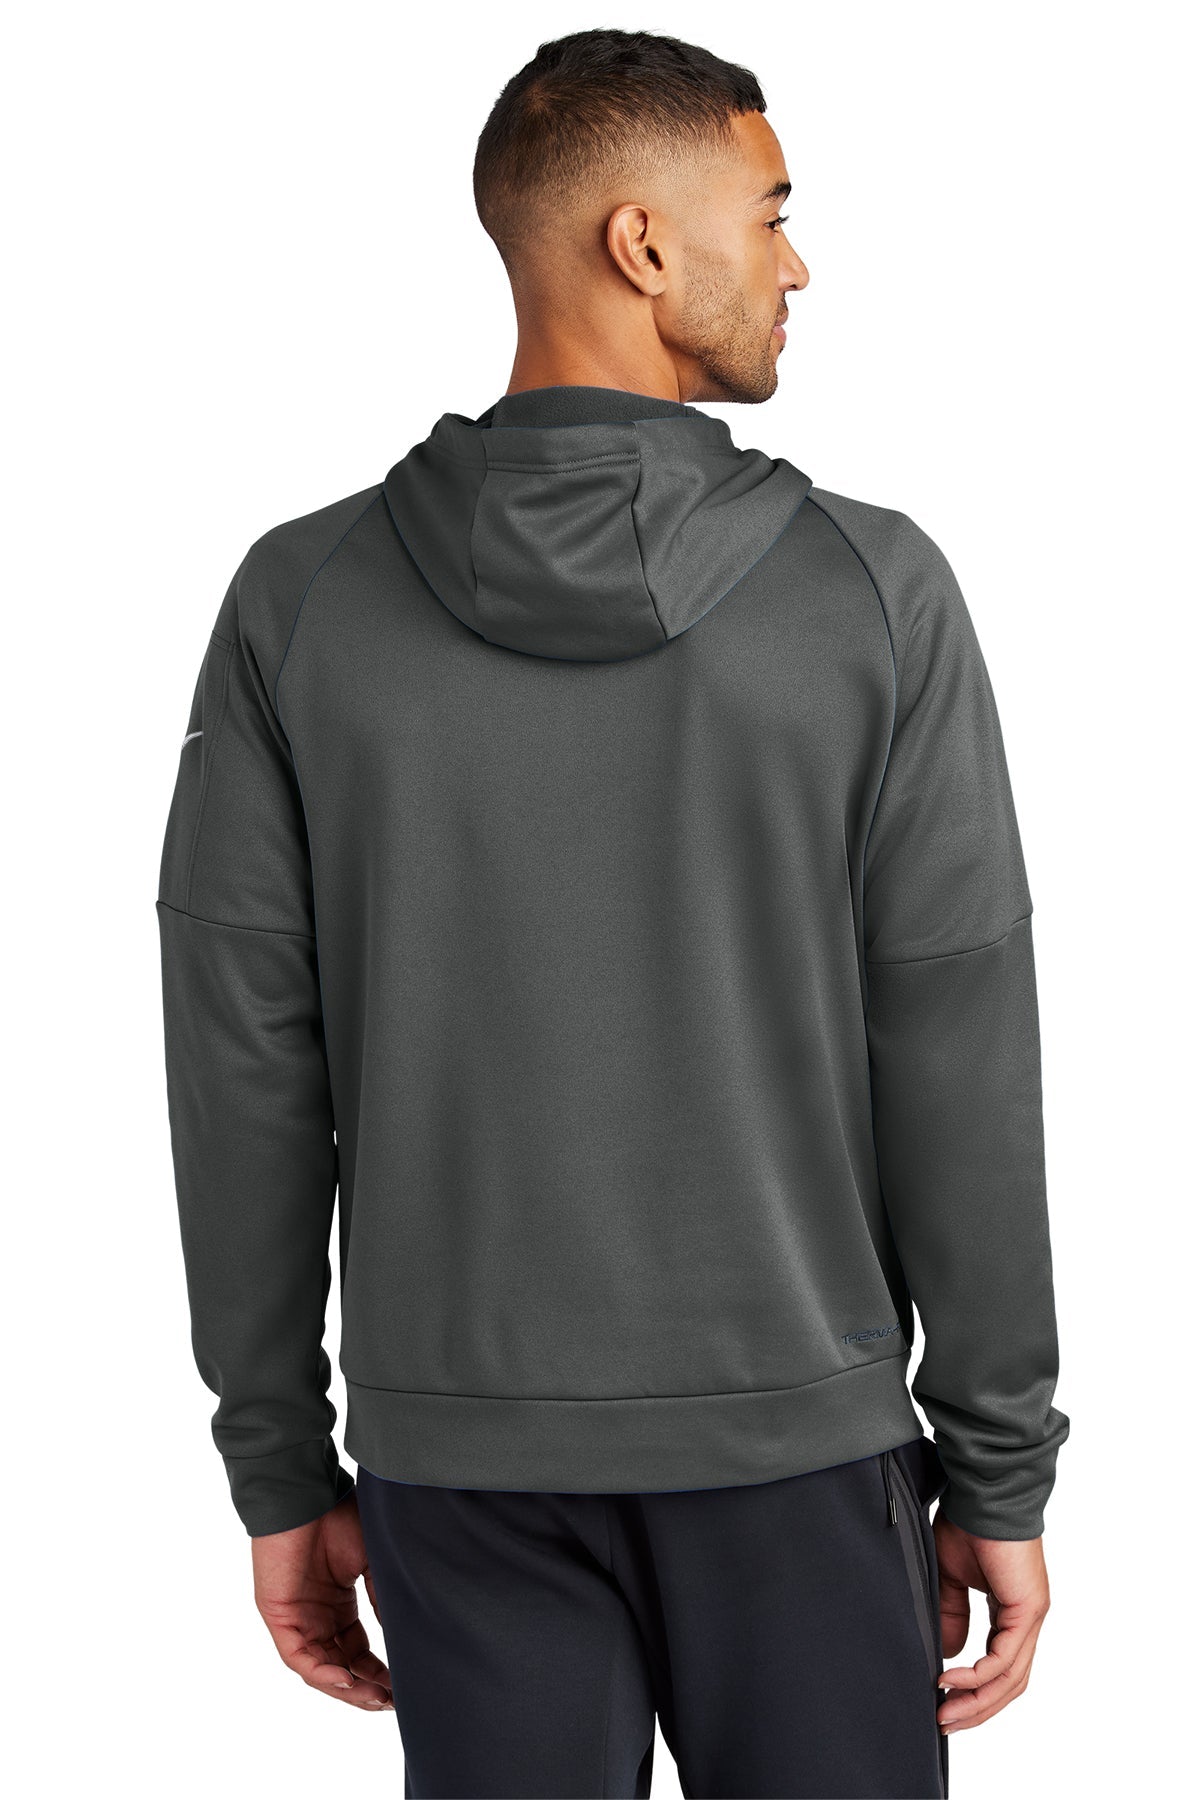 Nike Therma-FIT Pocket Fleece Custom Hoodies, Anthracite